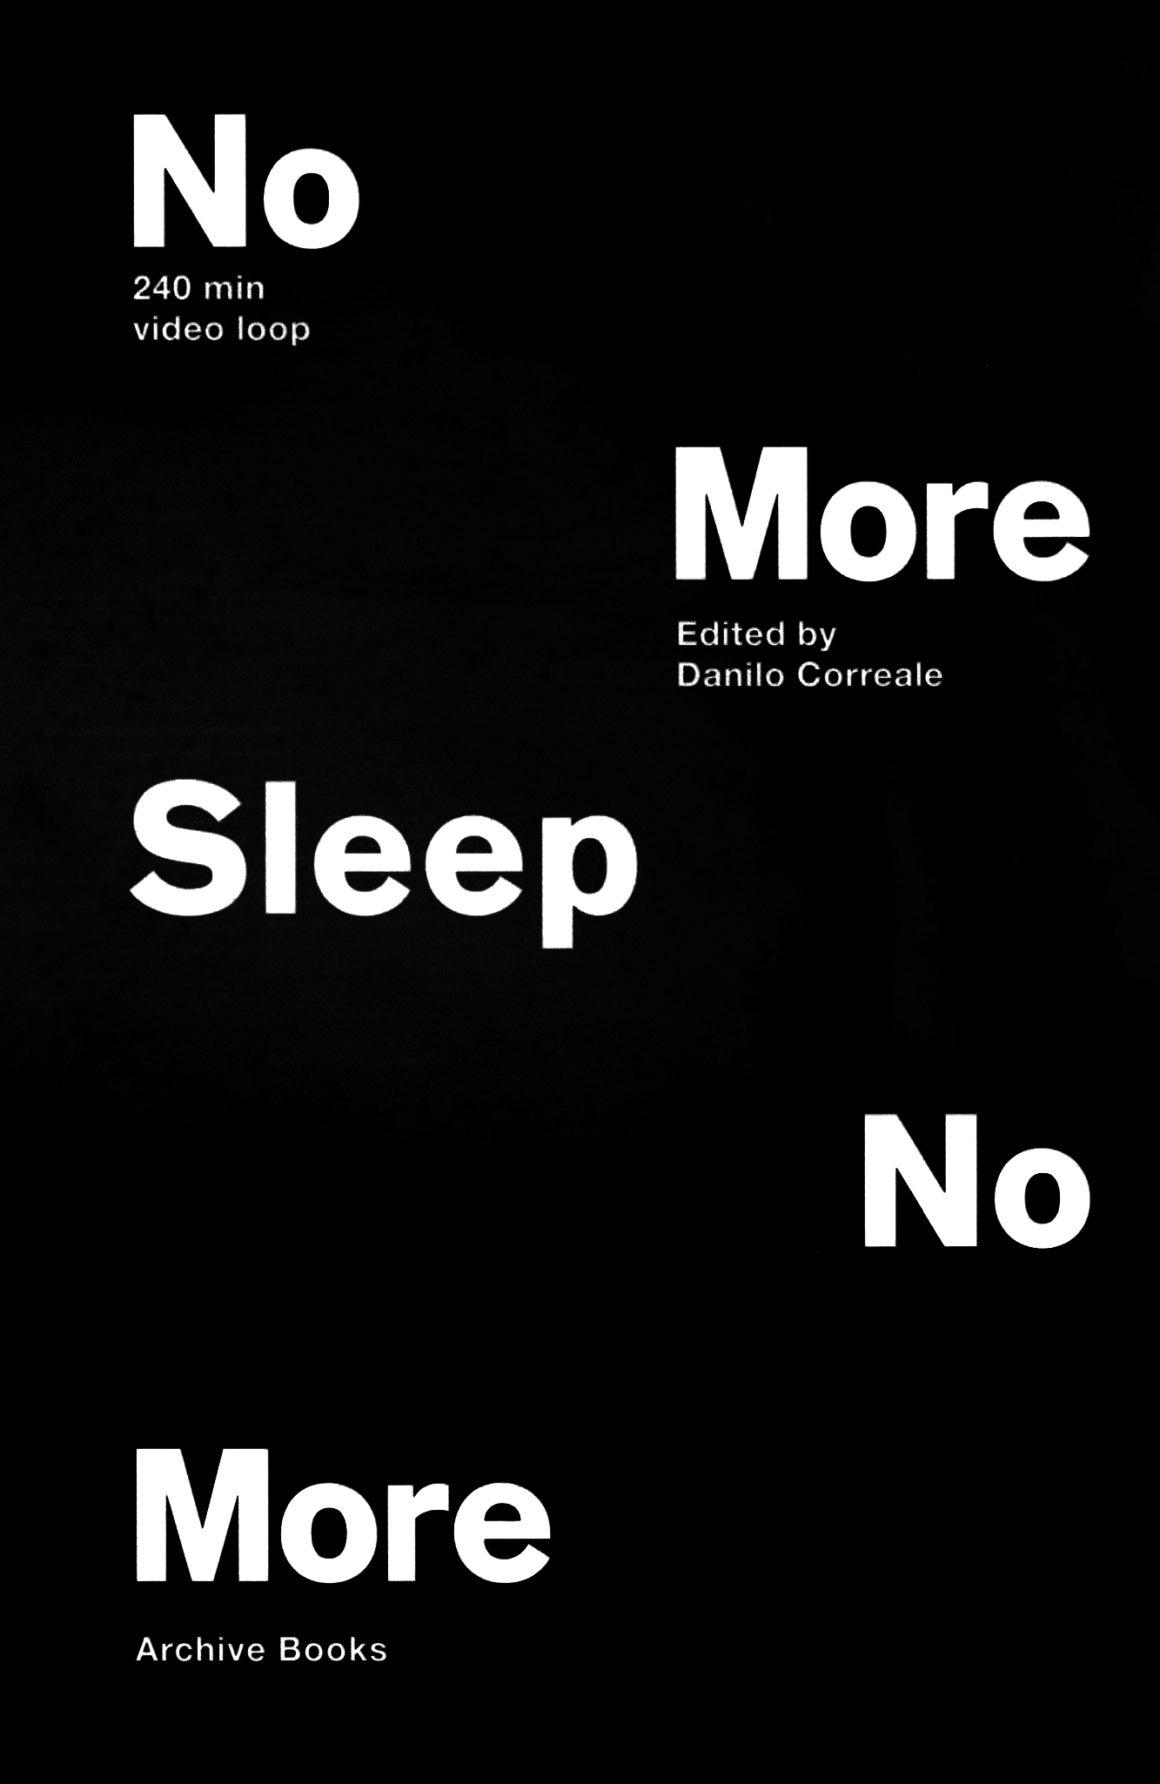 No More Sleep No More